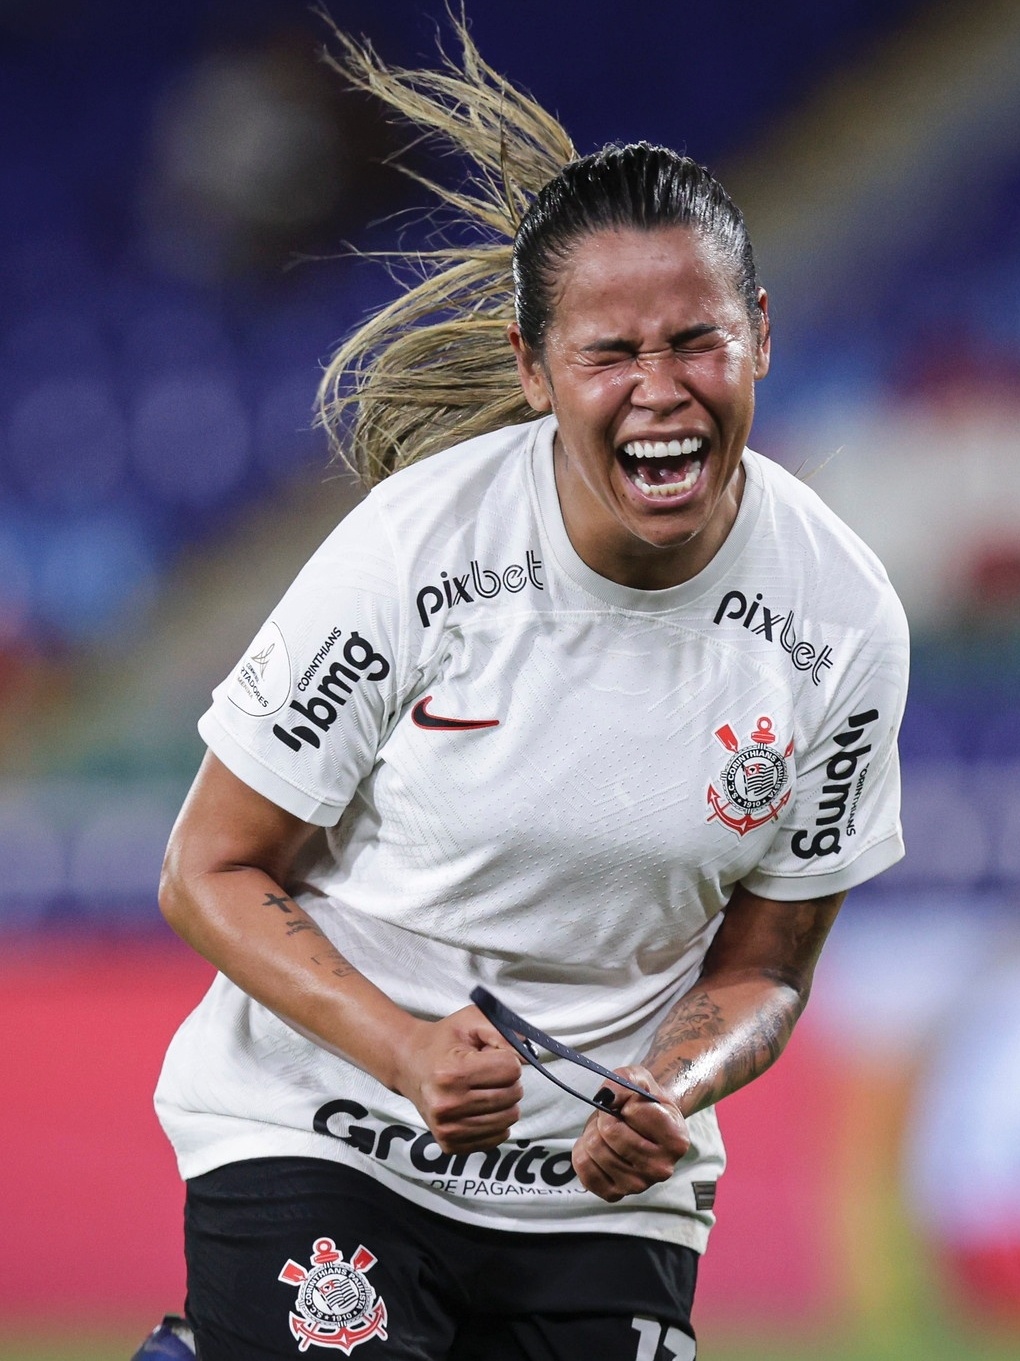 Libertadores Feminina: como foram os últimos jogos entre Palmeiras e  Corinthians?